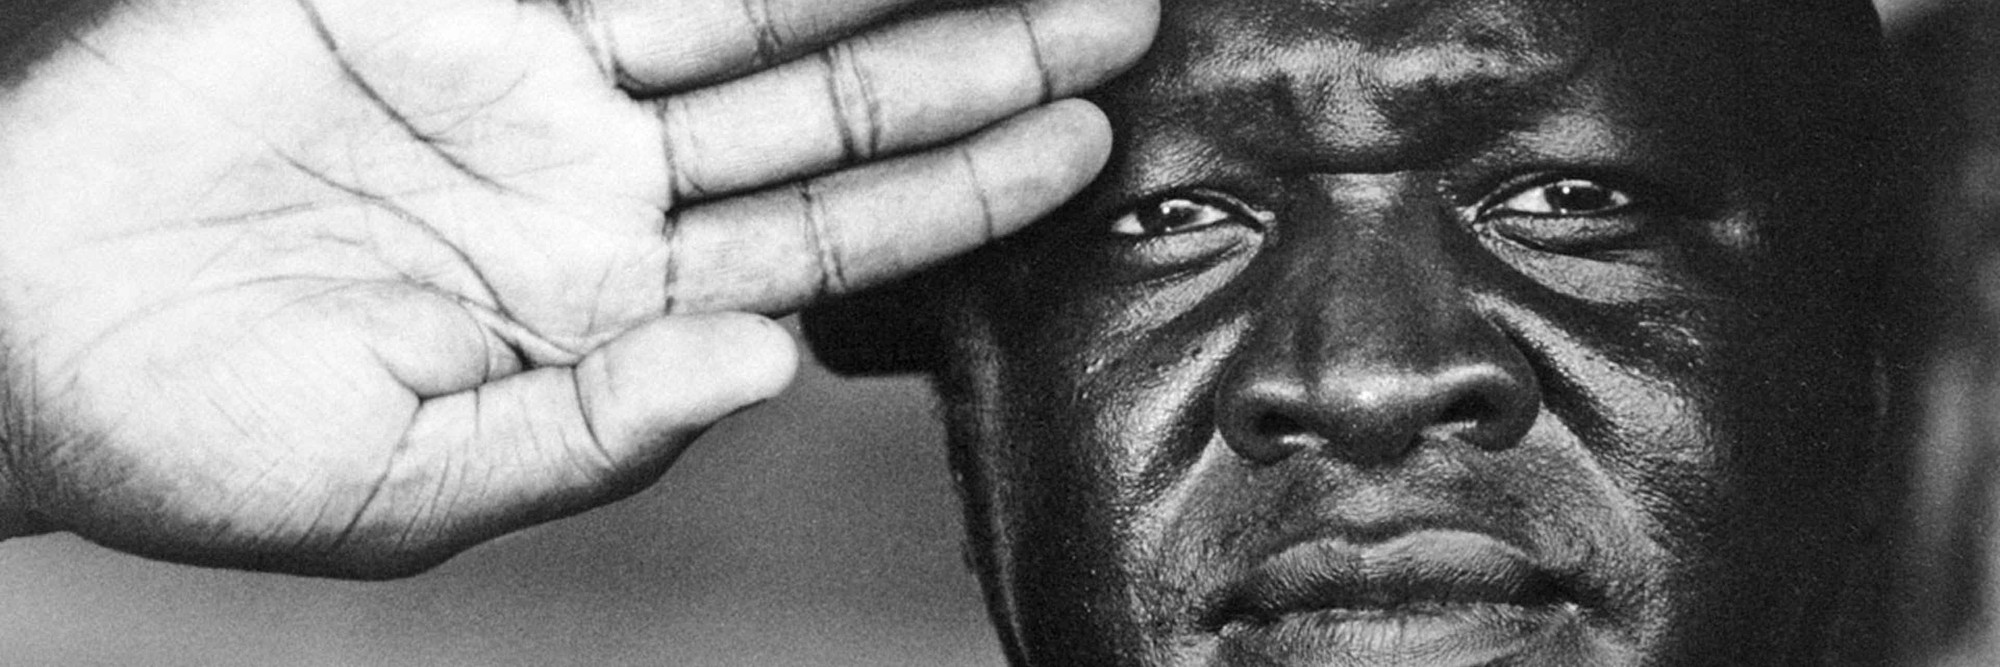 General Idi Amin Dada. 1974. France/Switzerland. Directed by Barbet Schroeder. Courtesy Les Films du Losange